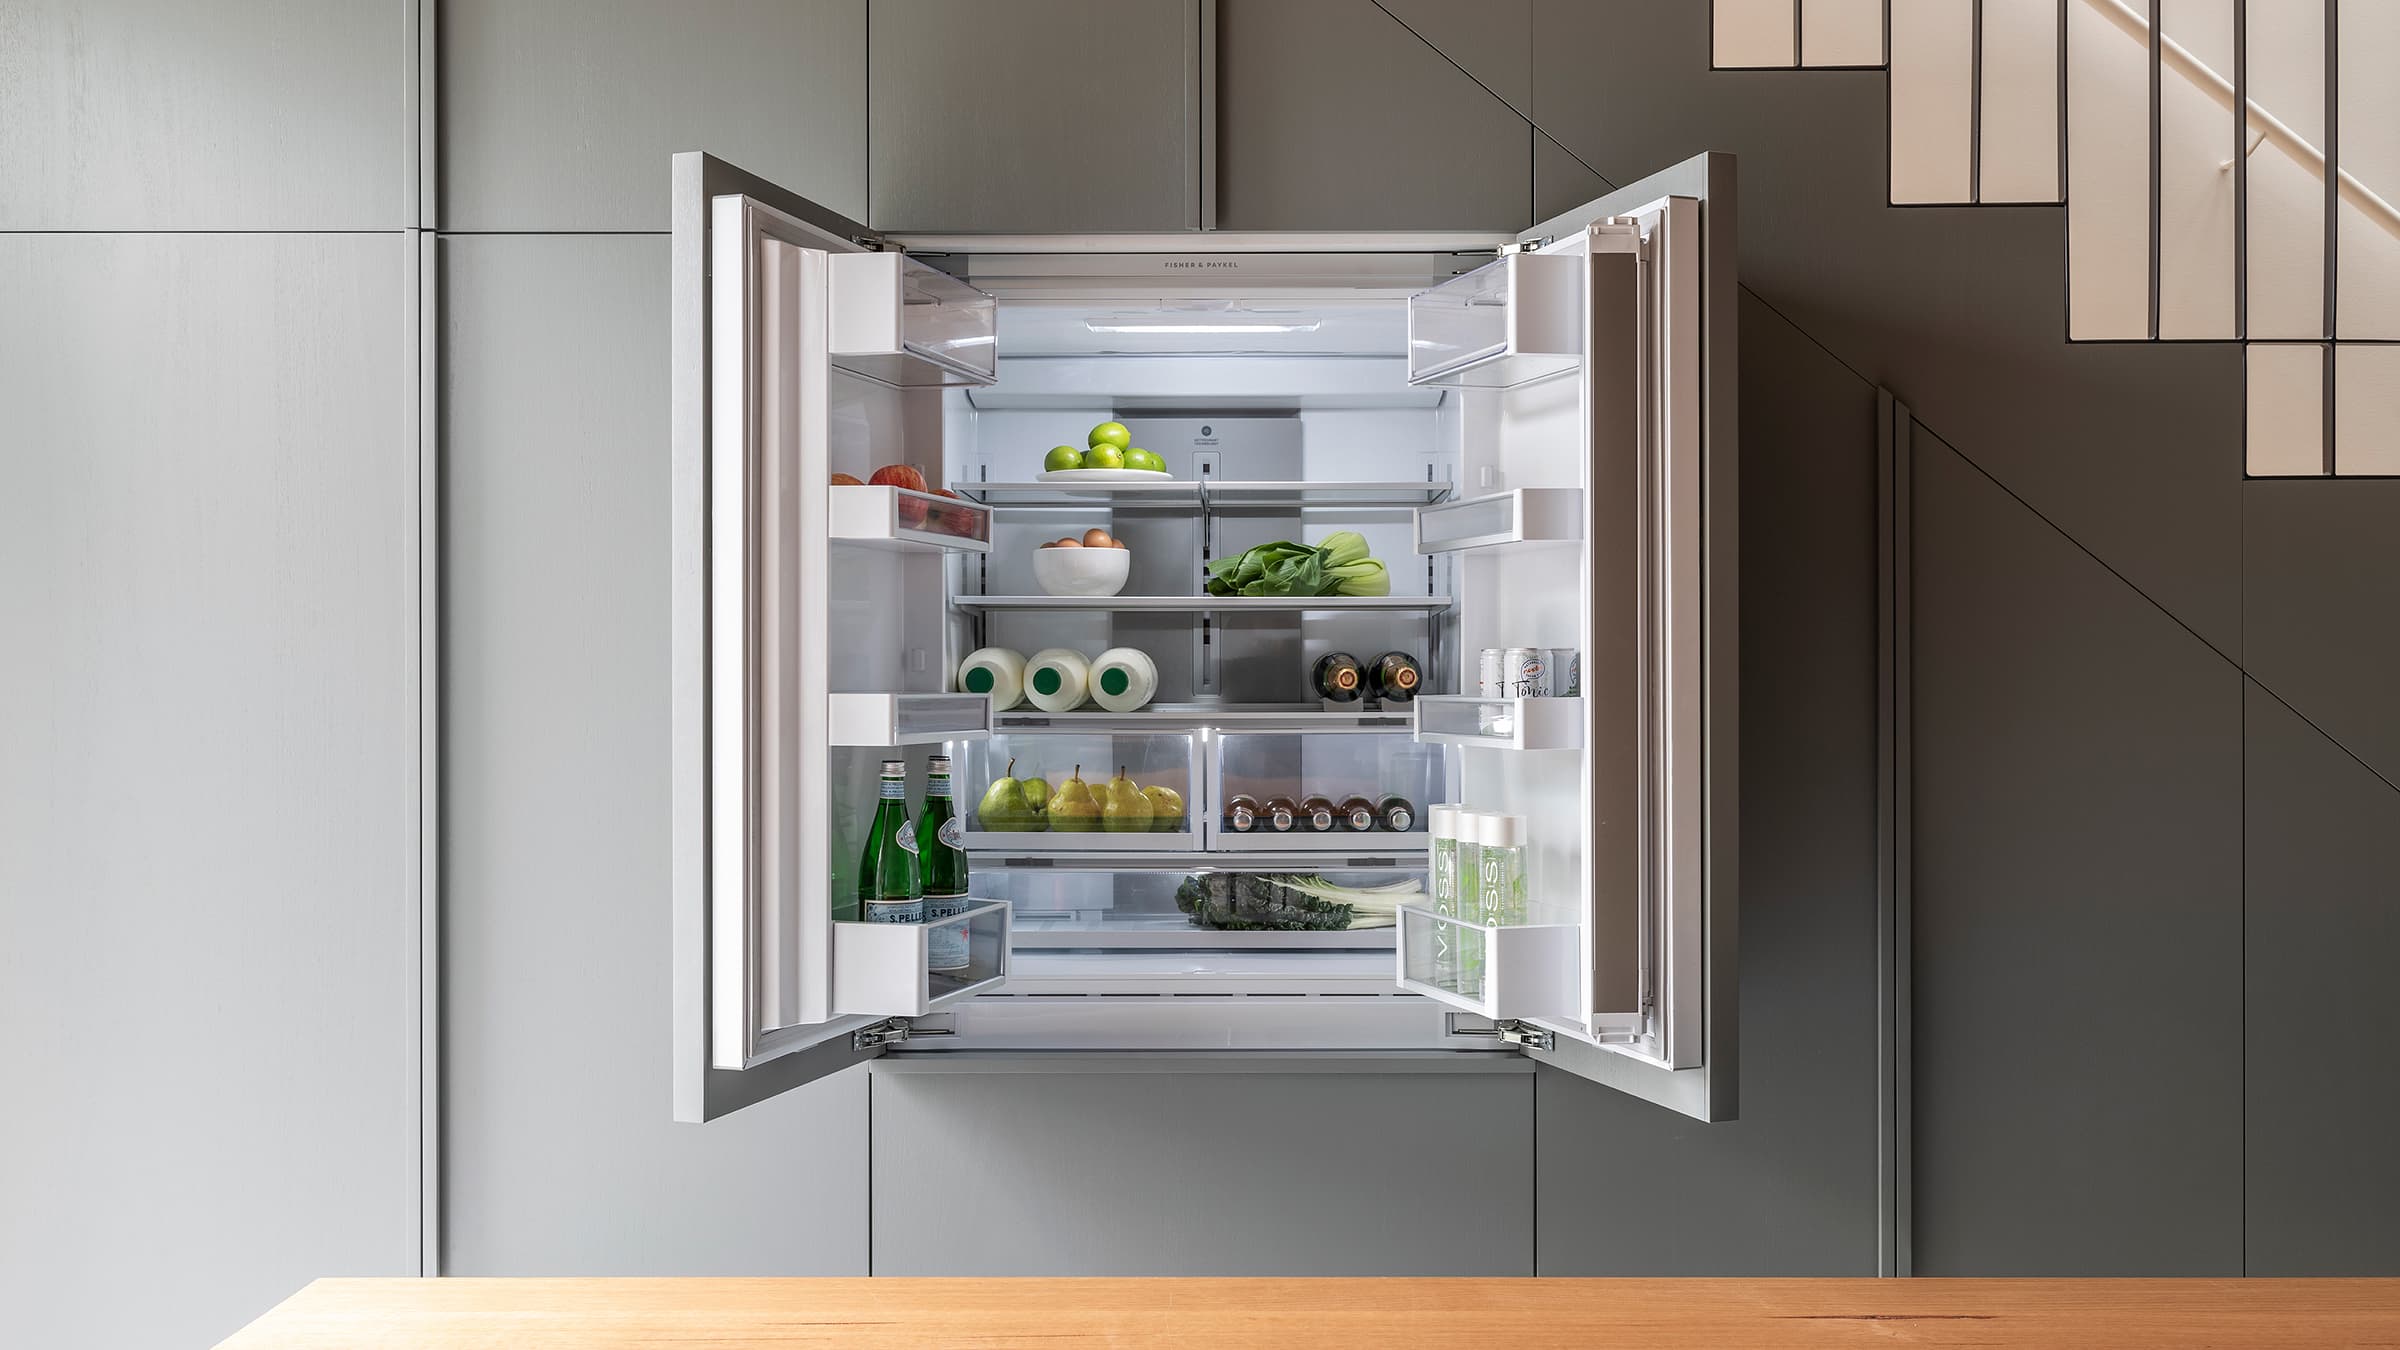 View of refrigerator with doors open